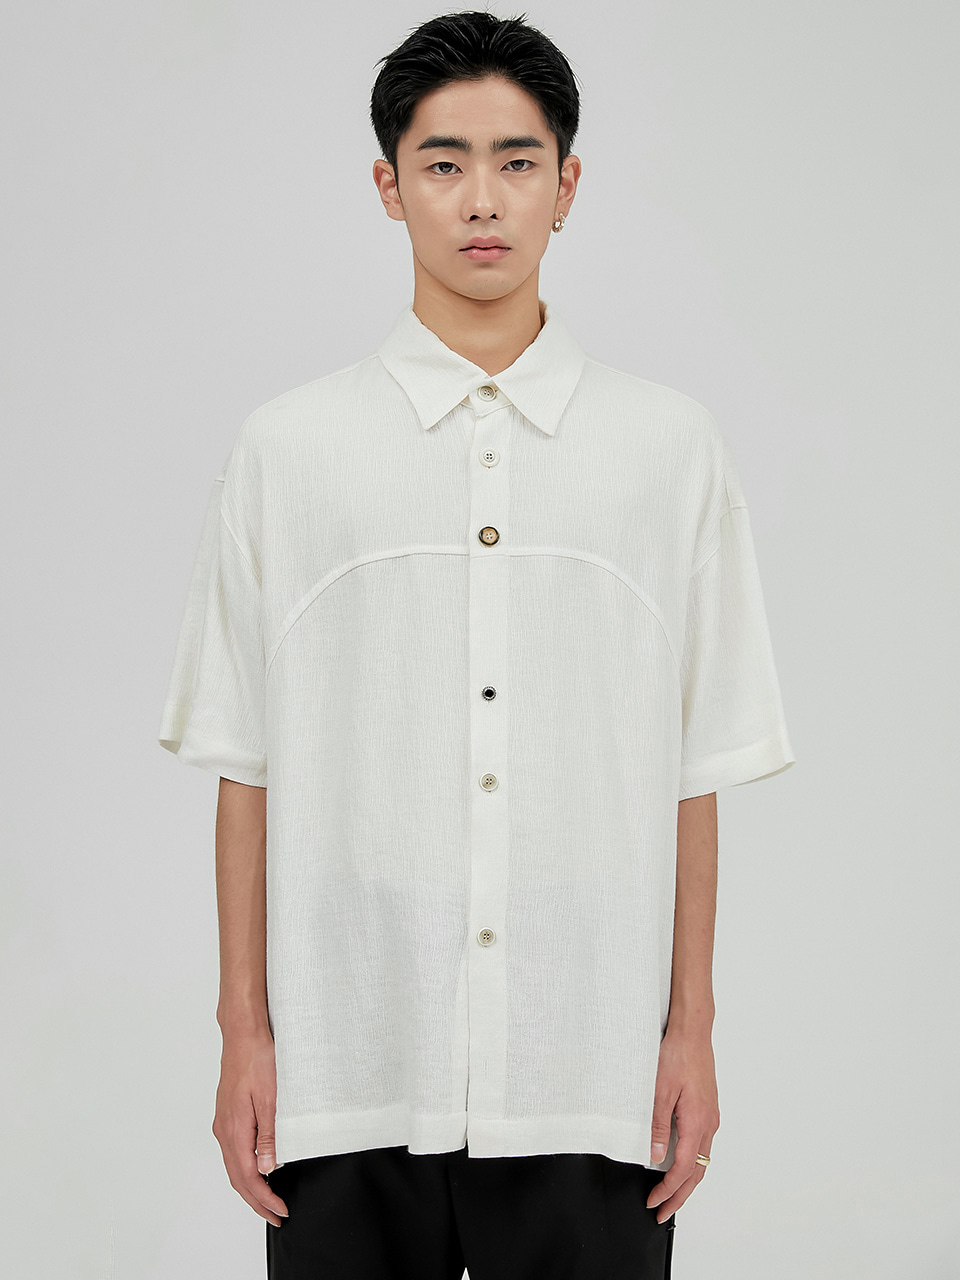 FLARE UP플레어업 E21 Western Short-sleeved Linen Shirt - Off White (FU-195)